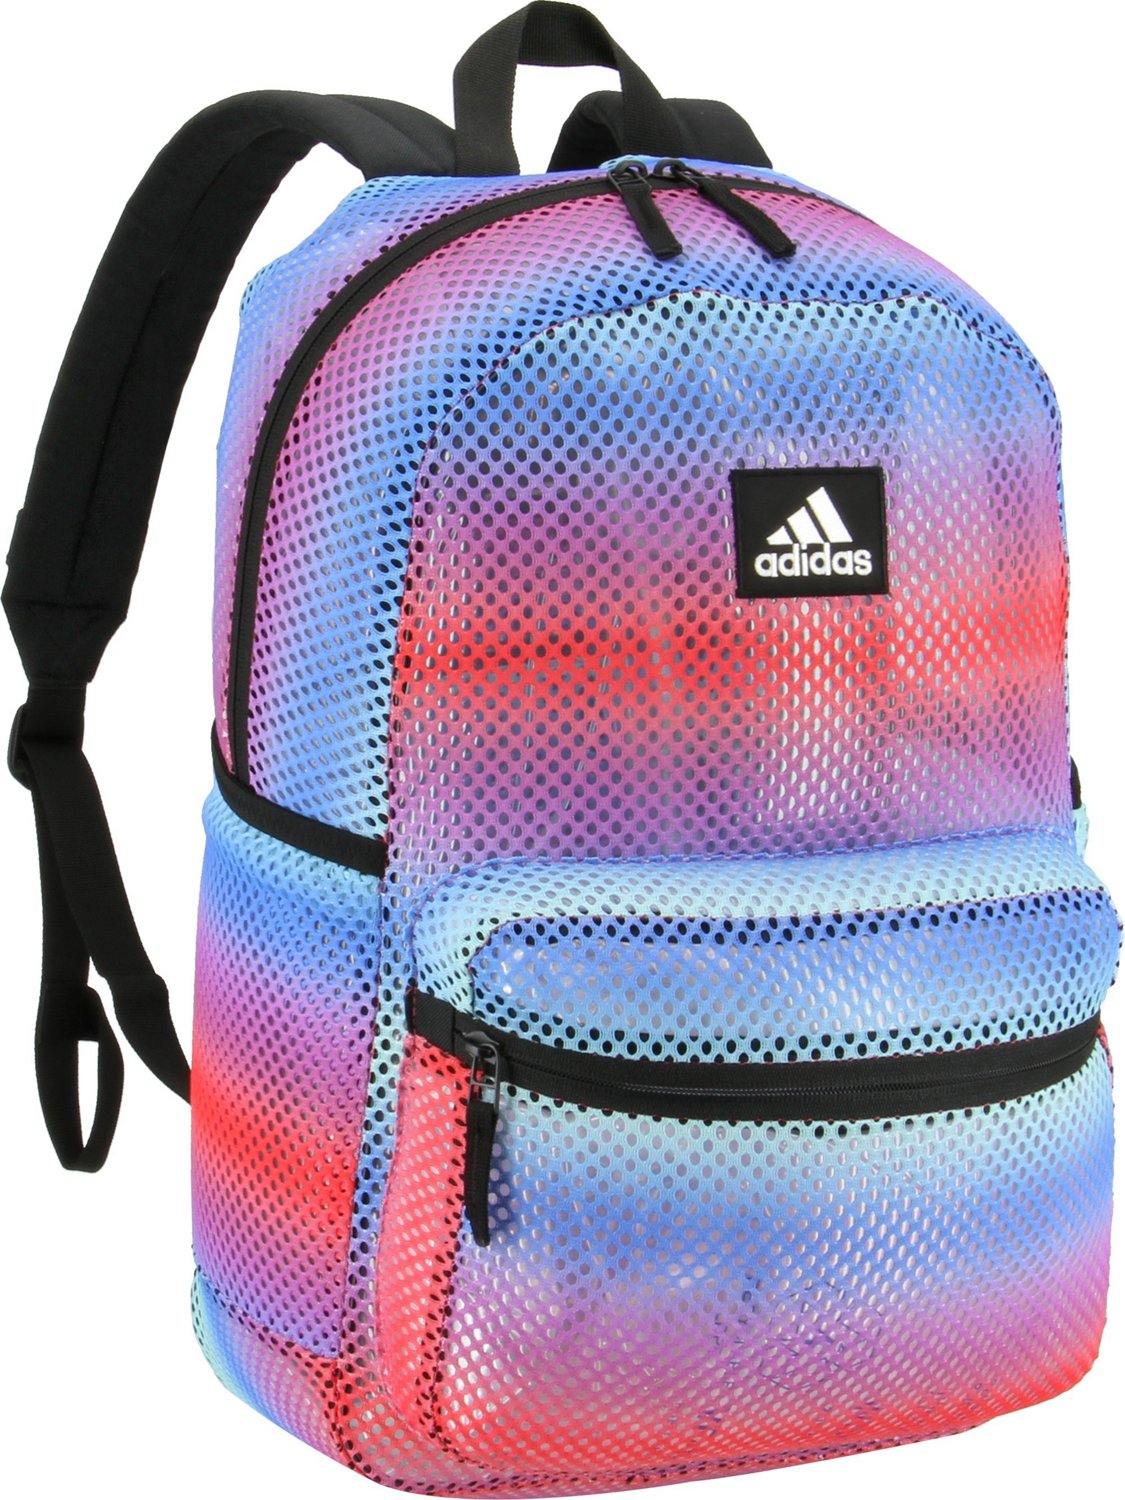 adidas mesh backpack pink